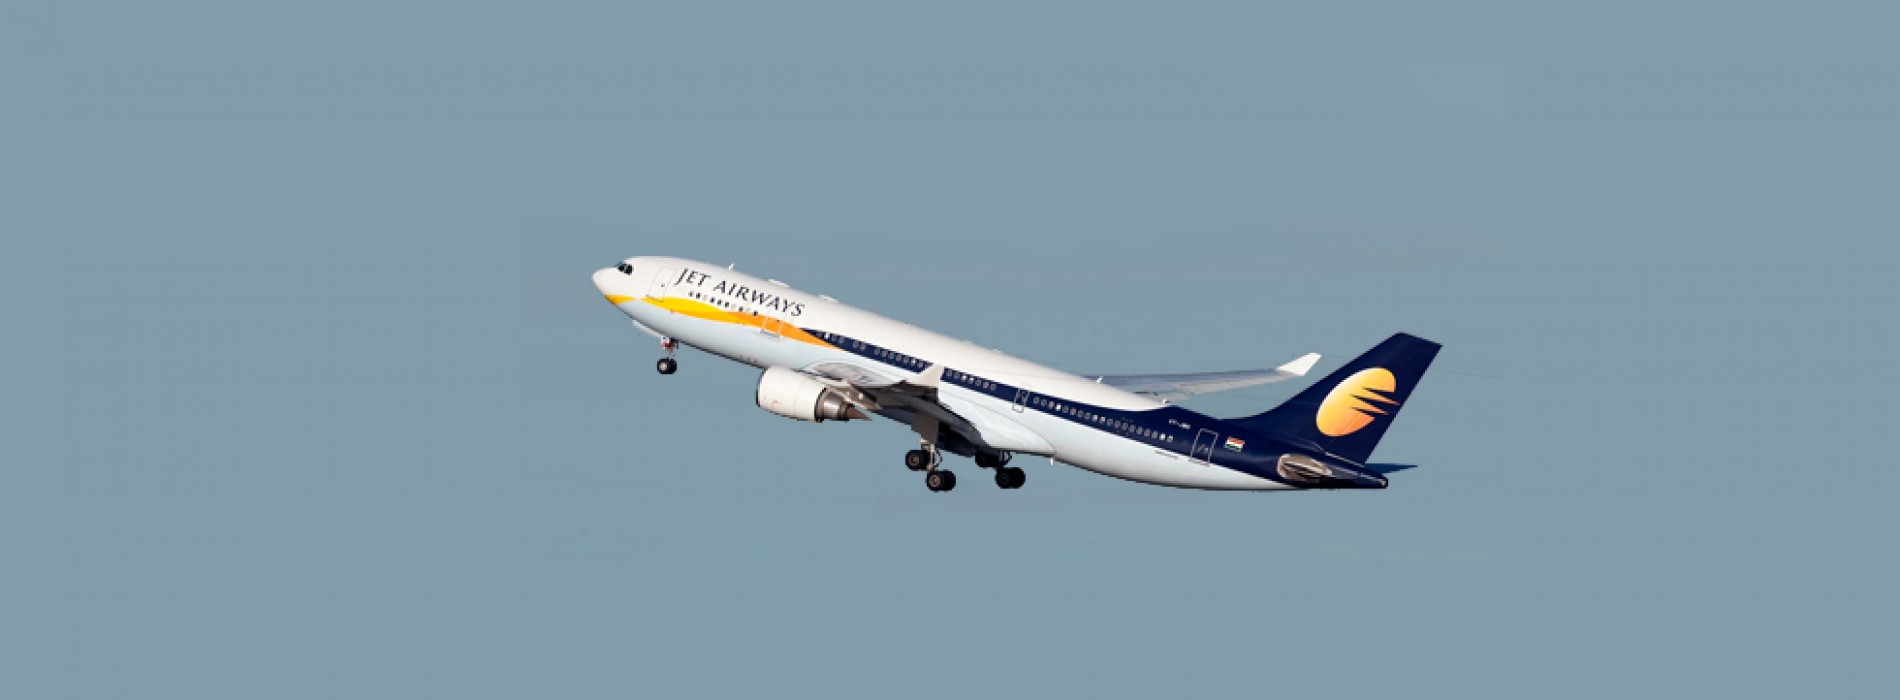 Jet Airways offers Special International Fares